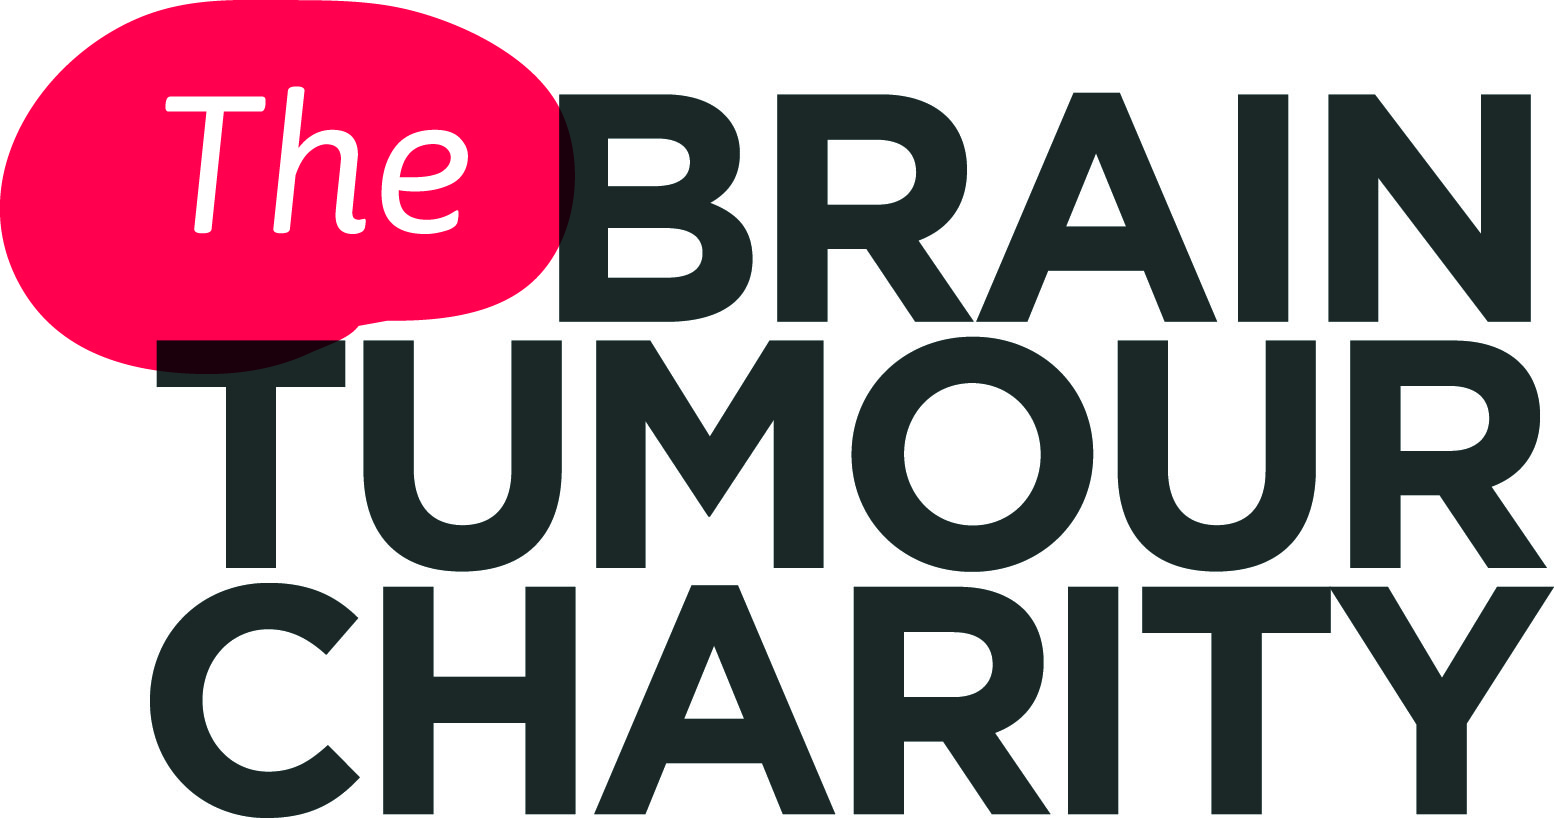 Brain tumour diagnosis  The Brain Tumour Charity